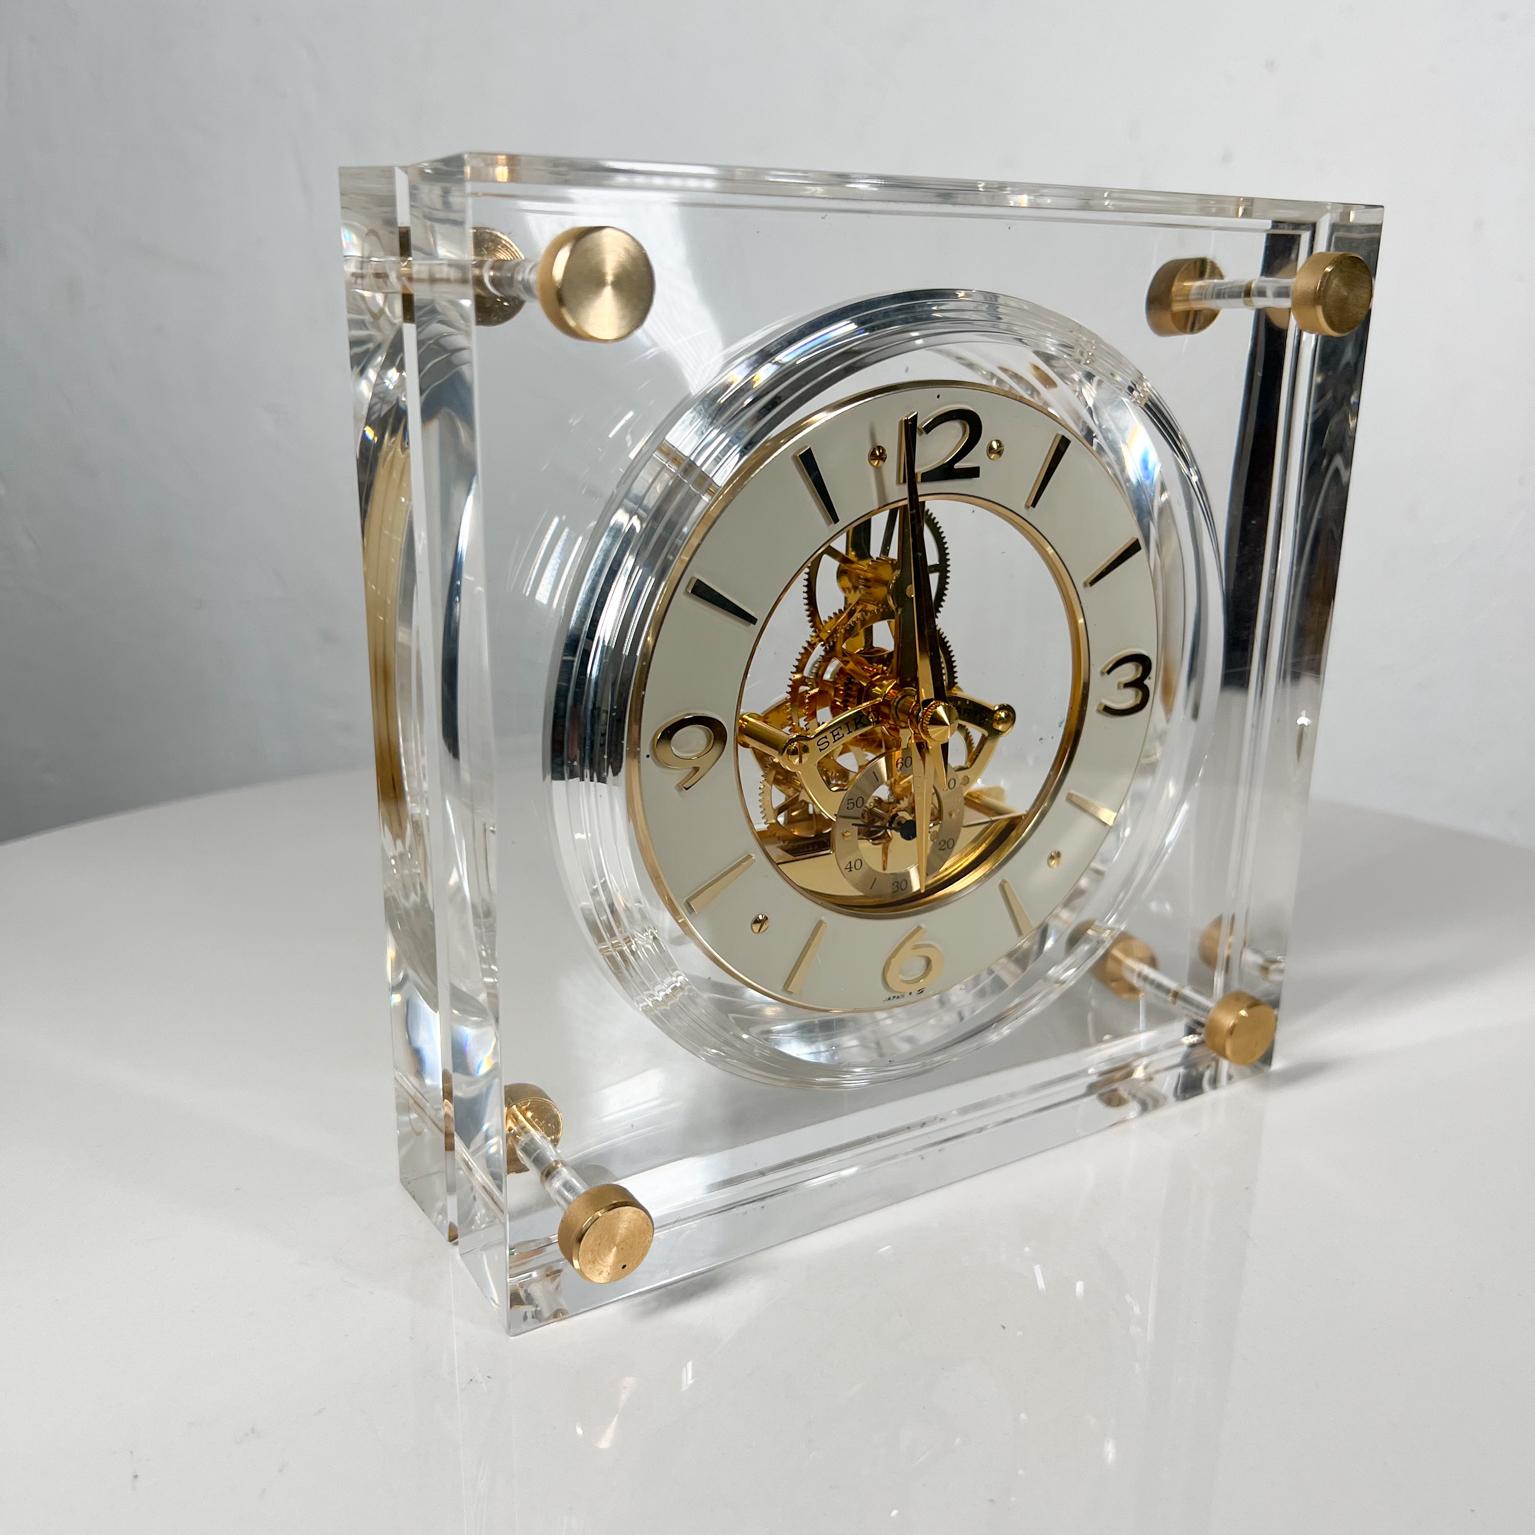 Seiko Table Clock Vintage - 2 For Sale on 1stDibs